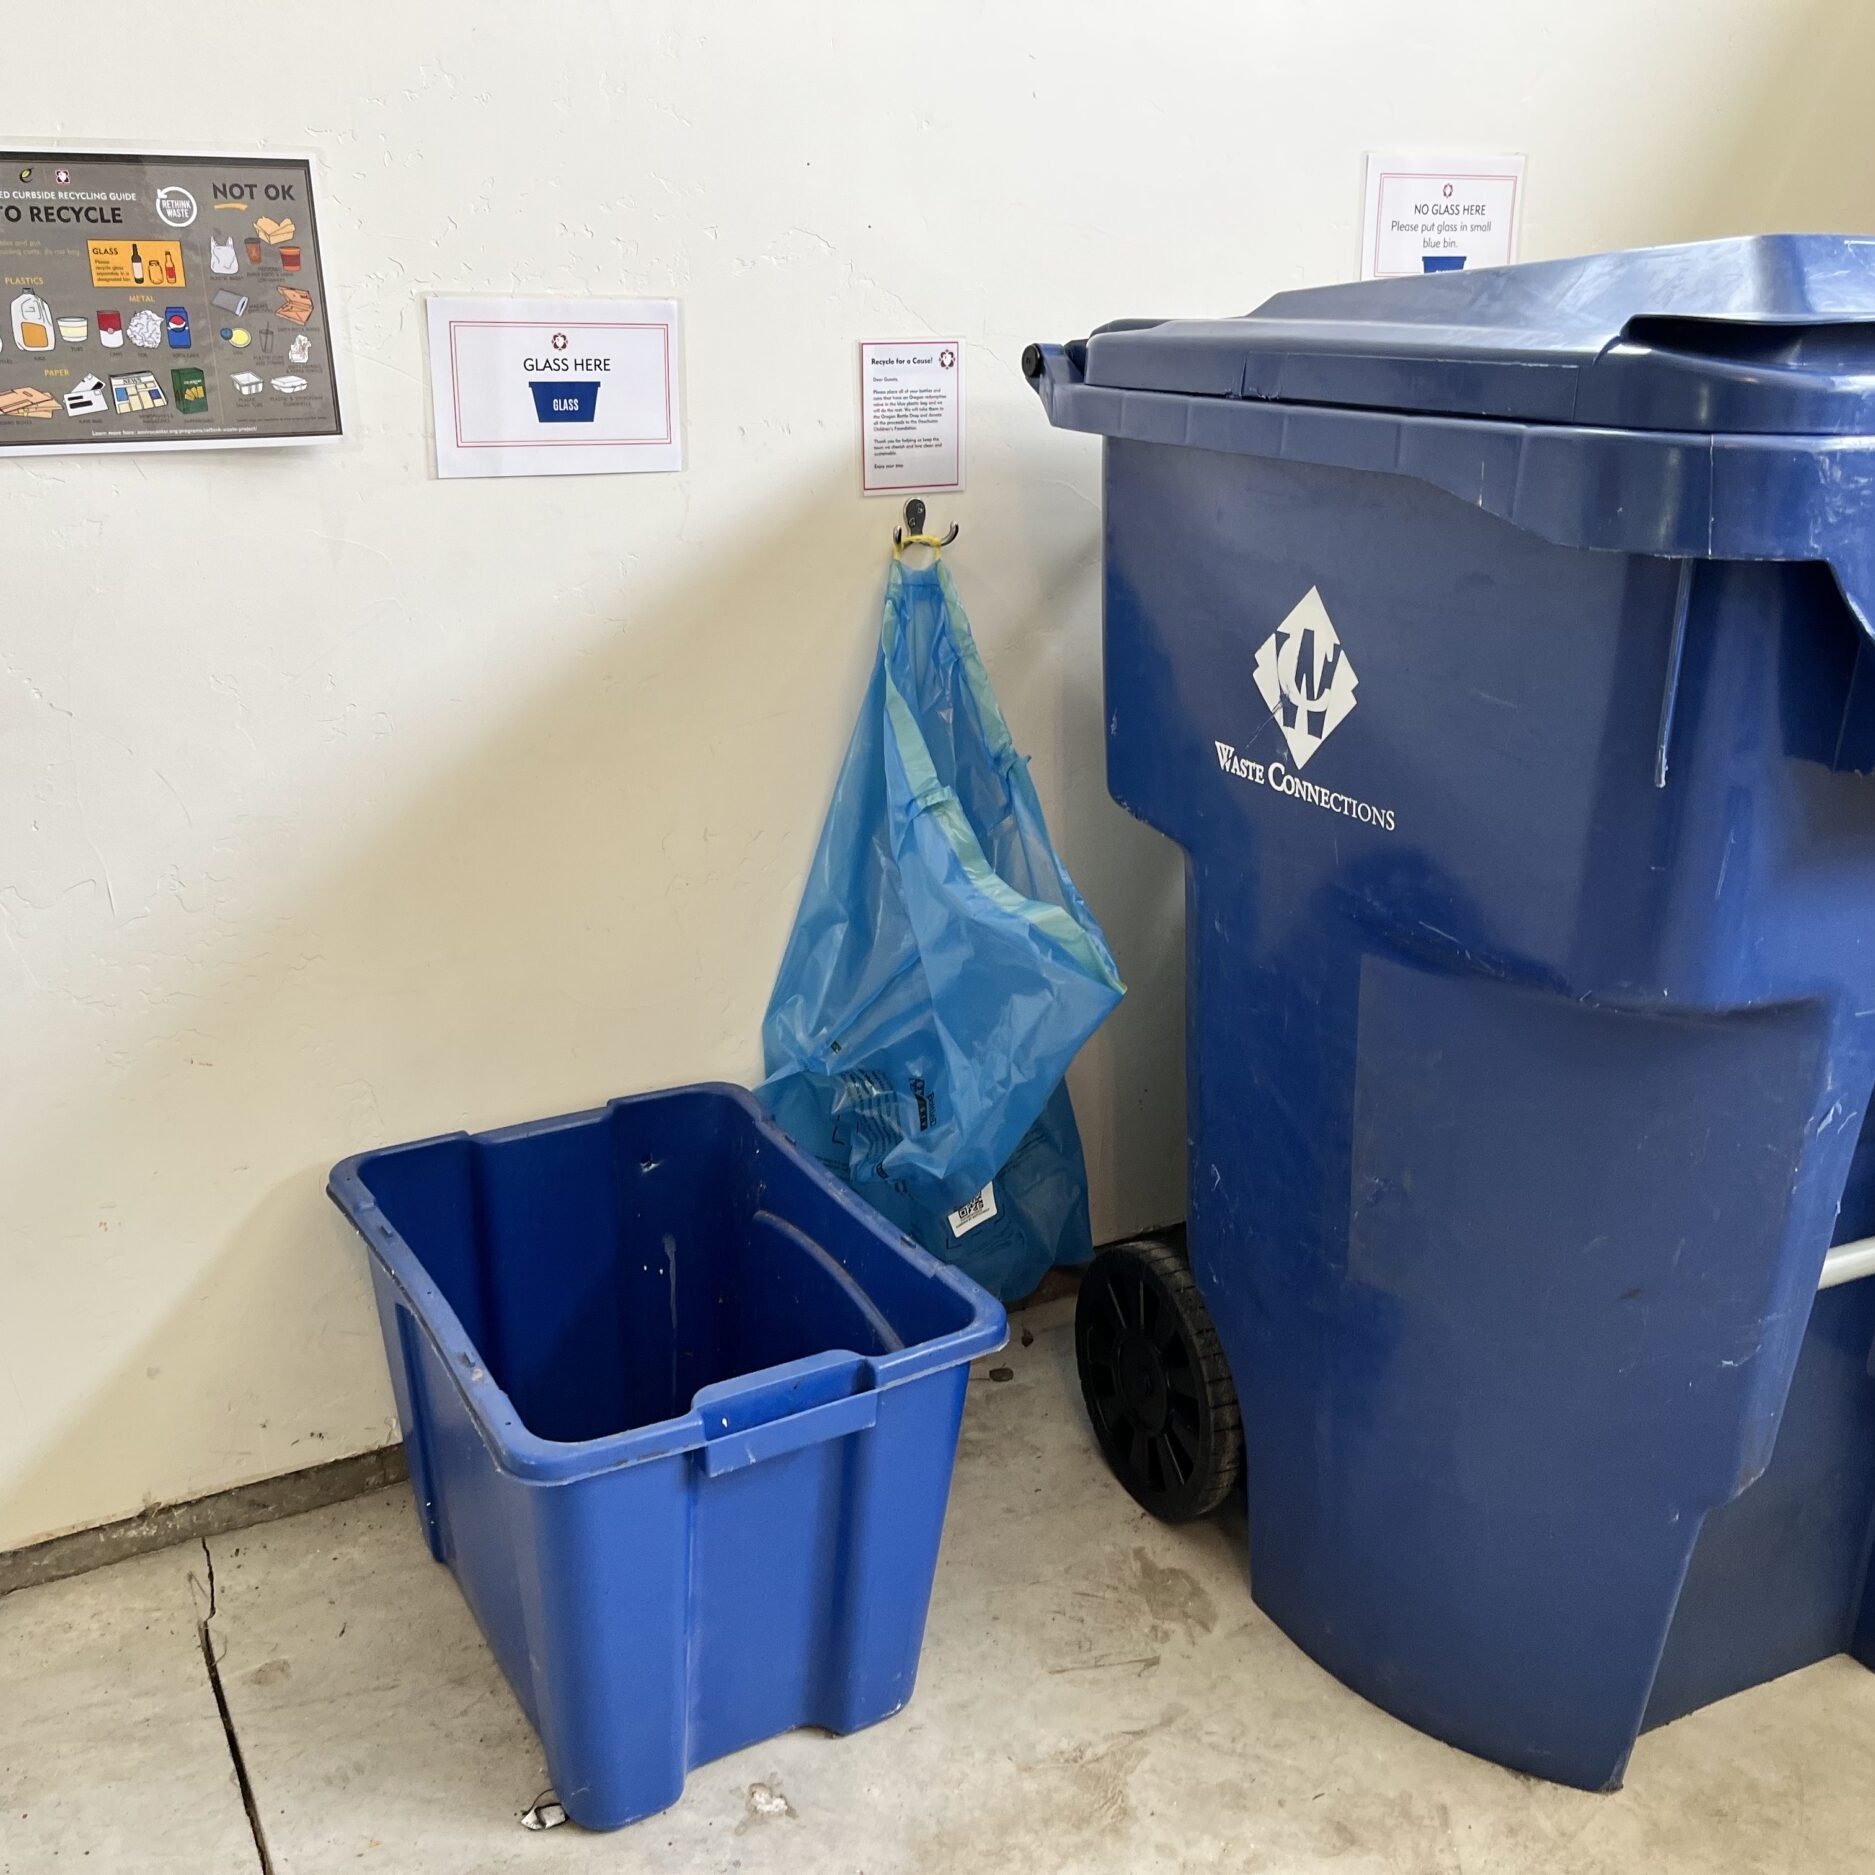 Blue redeemable BottleDrop bag hanging between two blue recycling bins